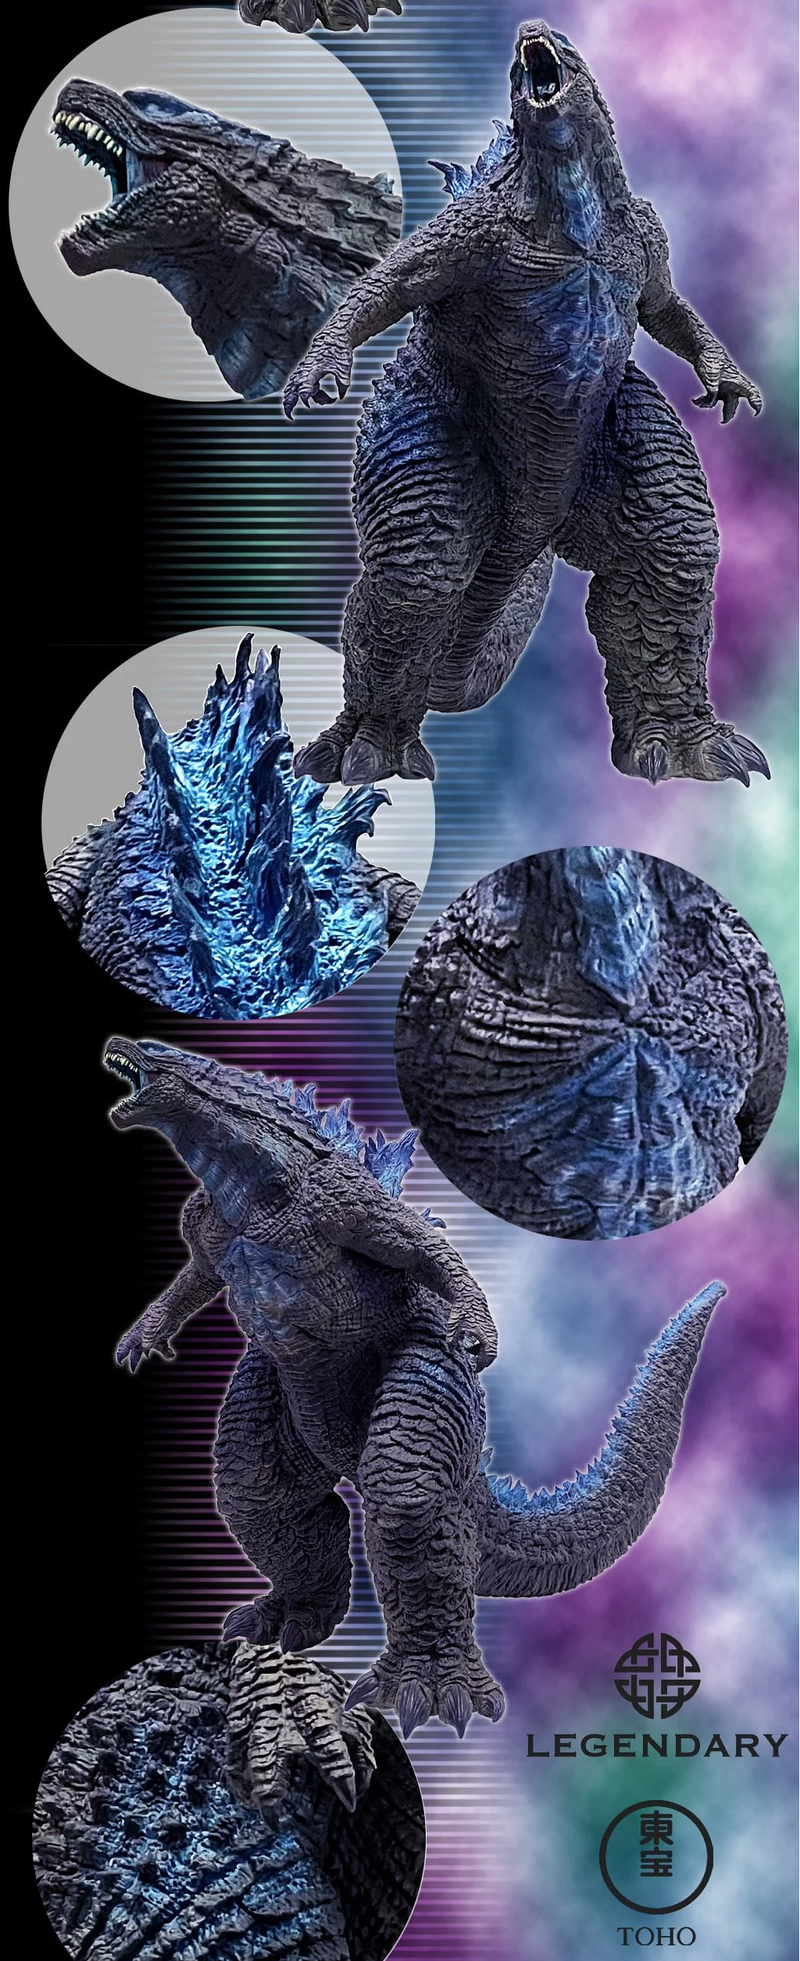 EZHOBI: Alpah Kaiju Series Godzilla 2021 Heat Ray Limited Ver.